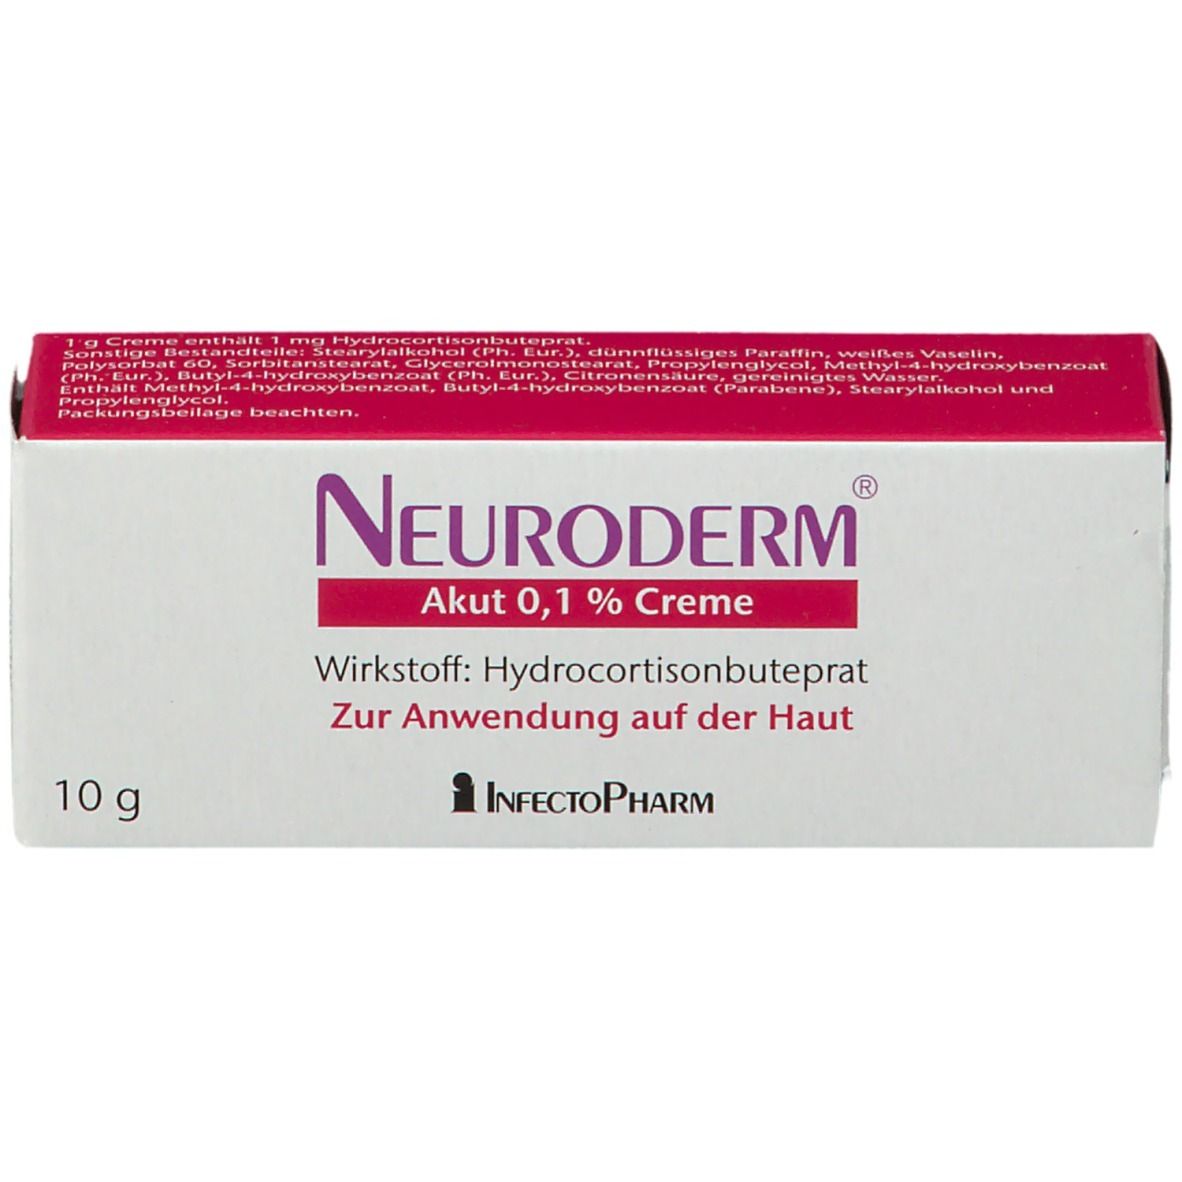 Neuroderm® Akut 0,1 %